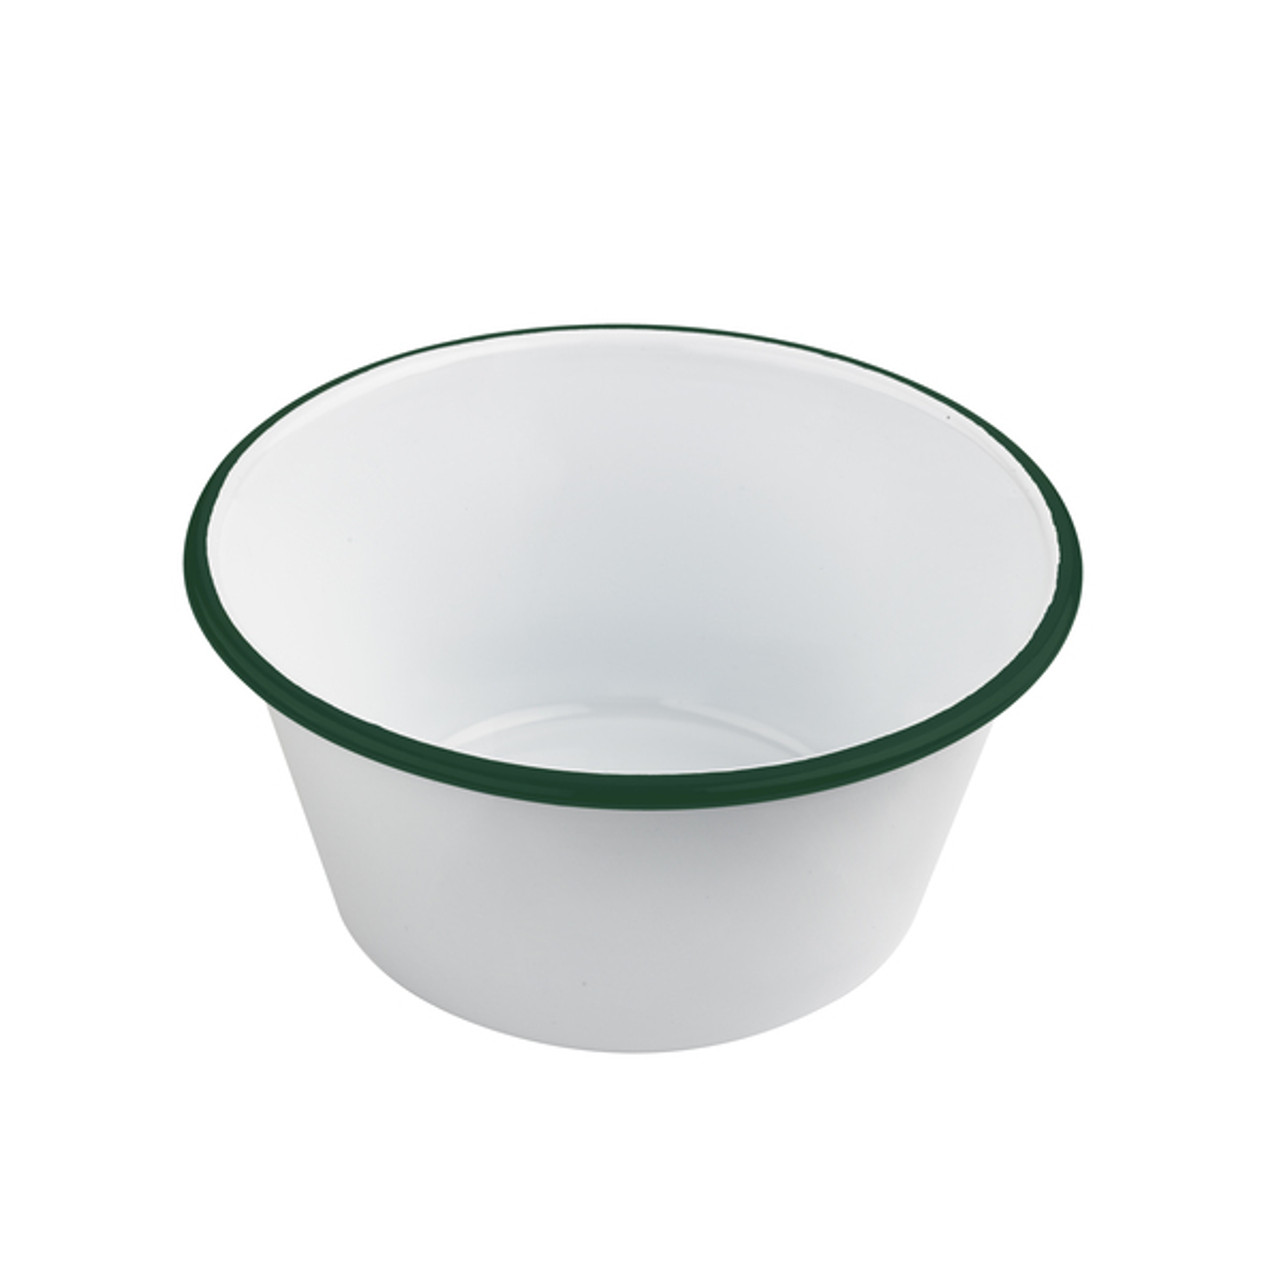 294ENBOL750 Enamel reusable deep bowl straight side white w/green rim 25oz D:5.5in H:2.6in - 12 pcs